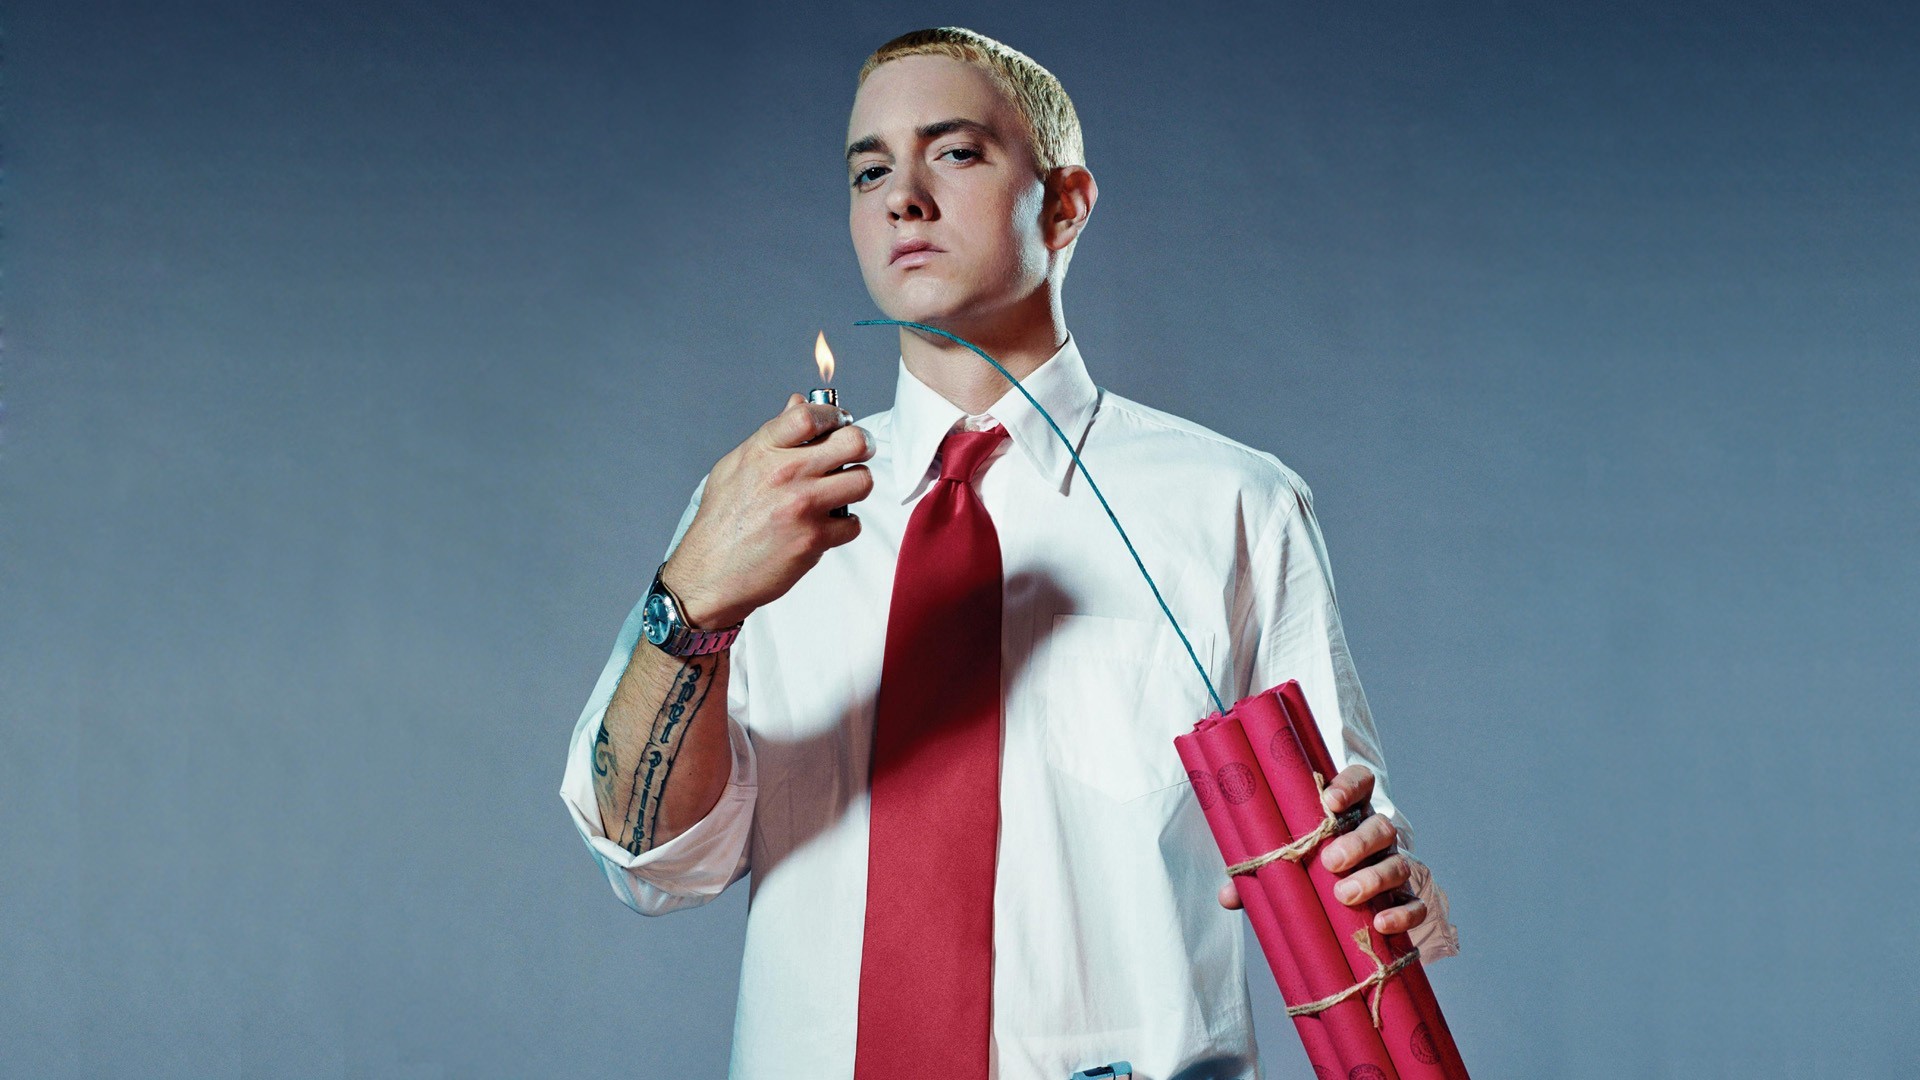 Eminem Dynamite Lighter Tattoo Men Singer Blue Background Tie 1920x1080